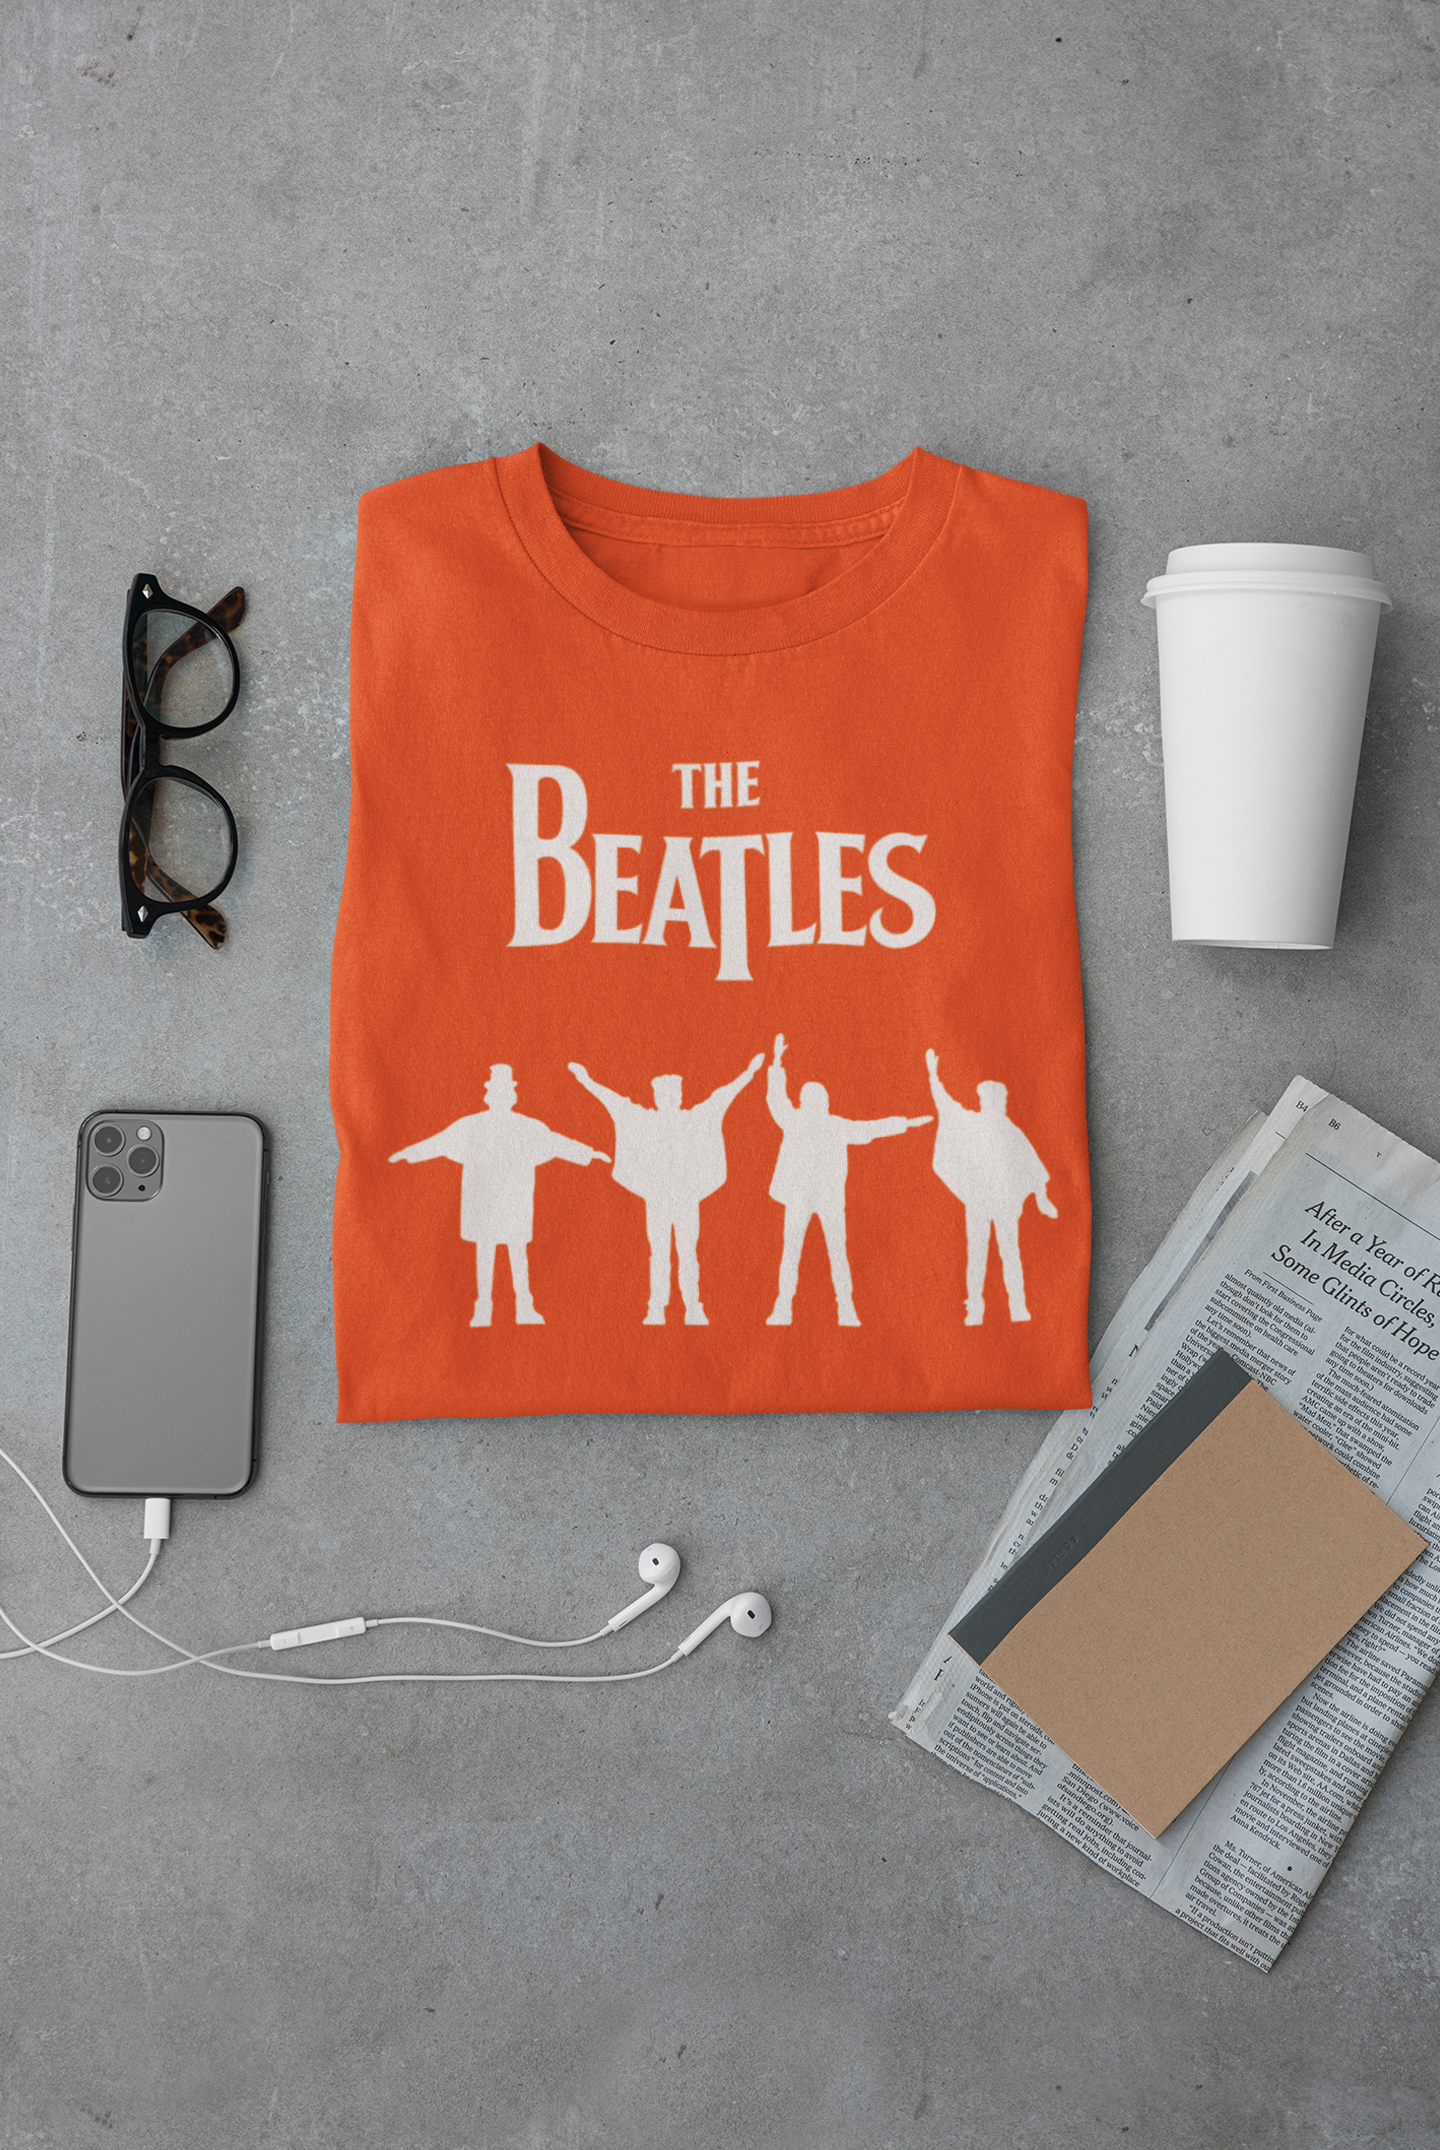 Camiseta "The Beatles Group" - Música